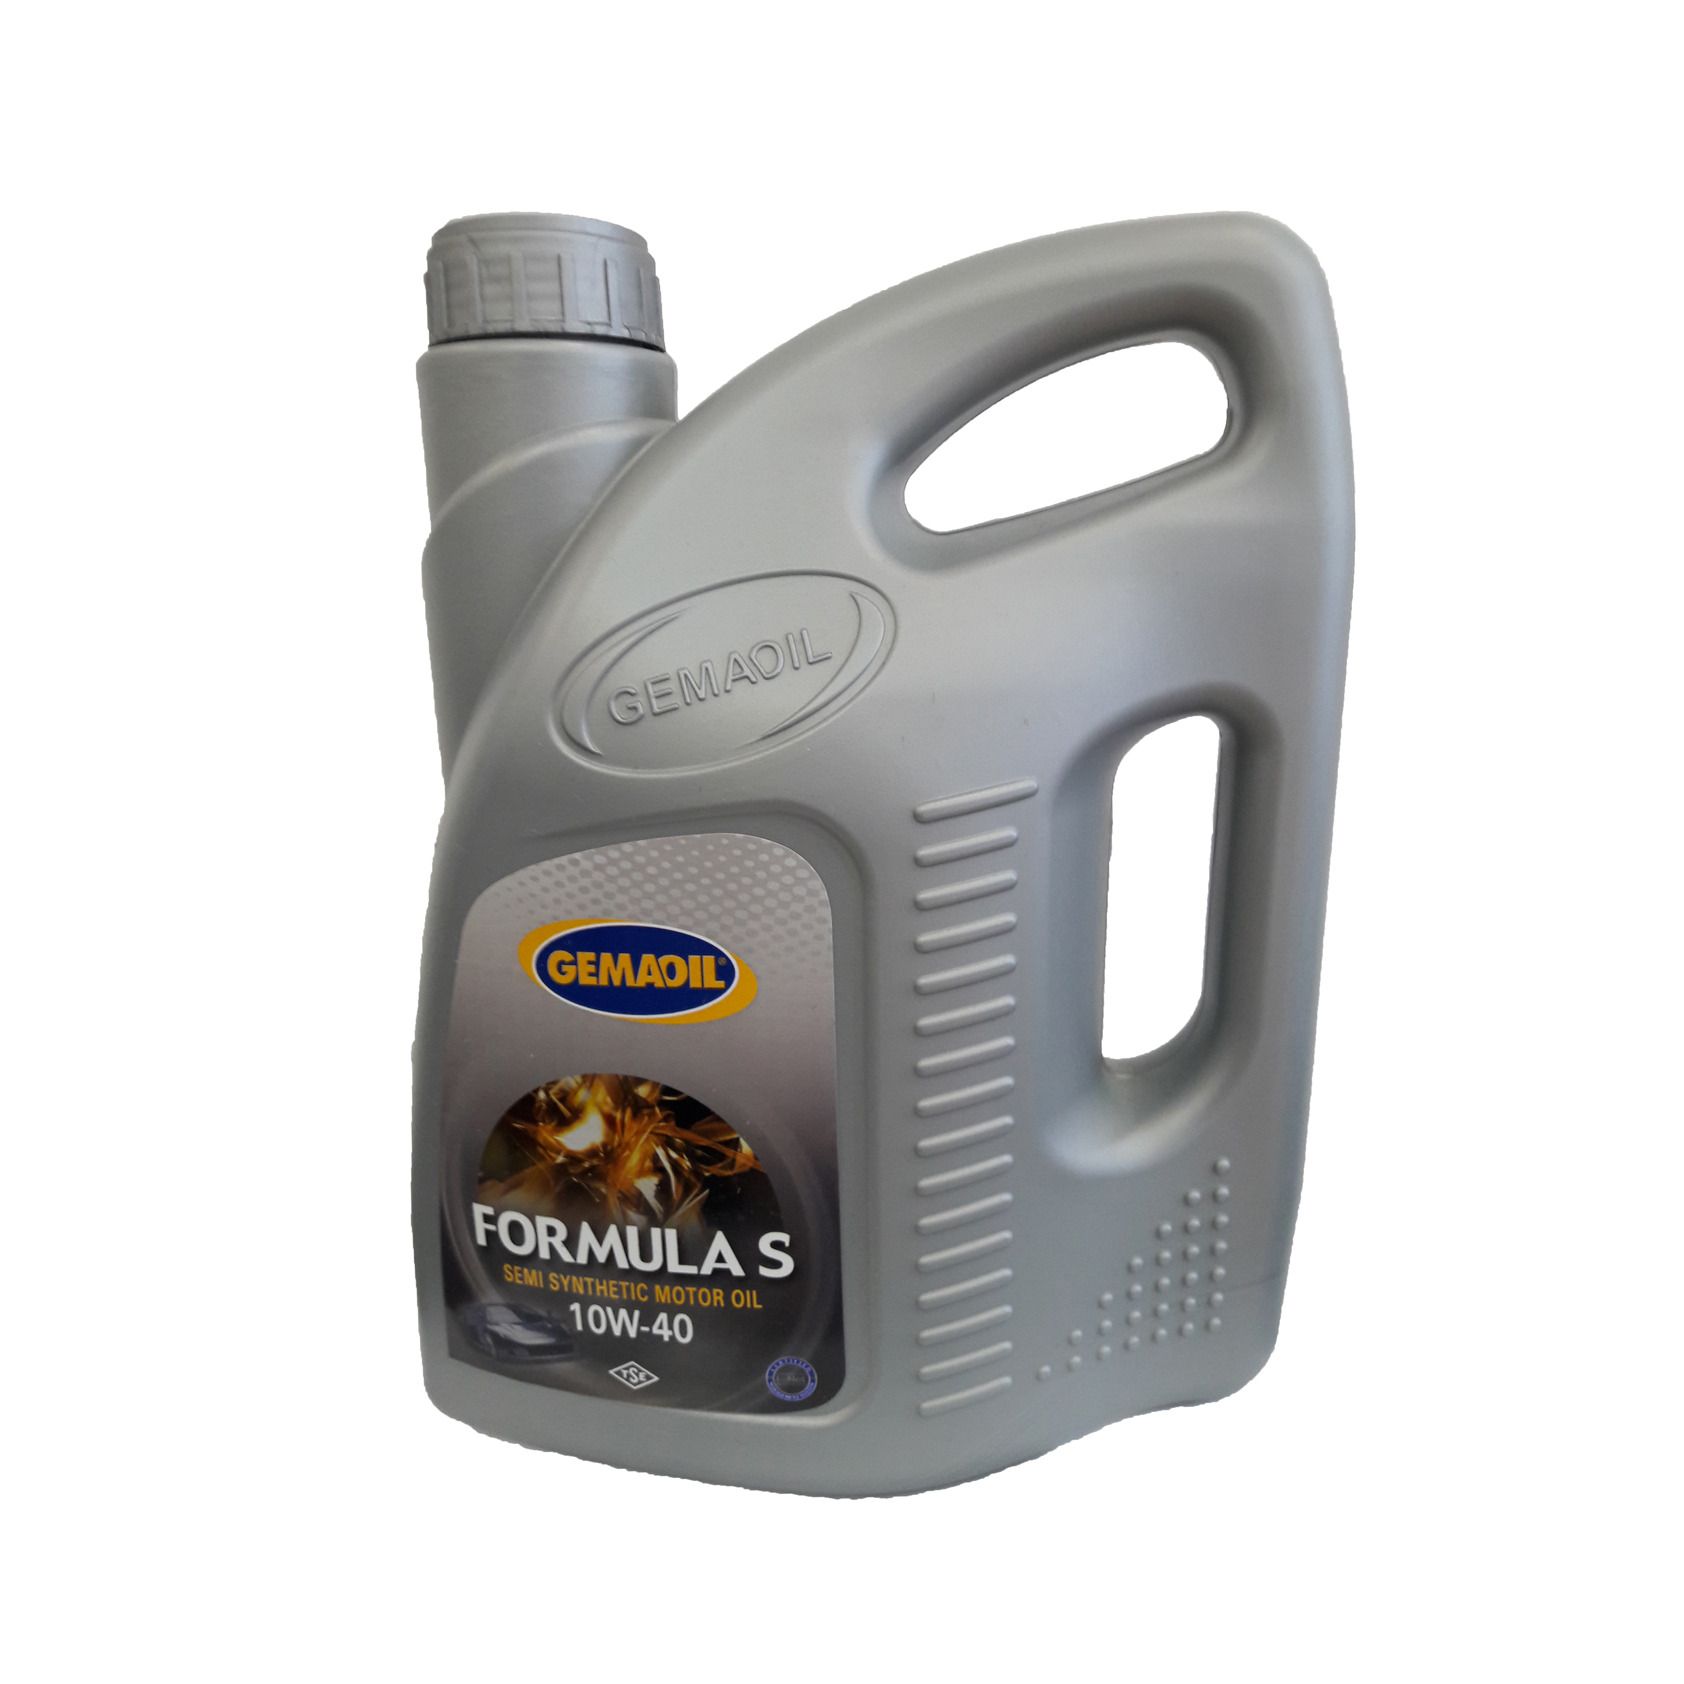 GEMA OIL FORMULA S 10W-40,(Semi Synthetic) 4L